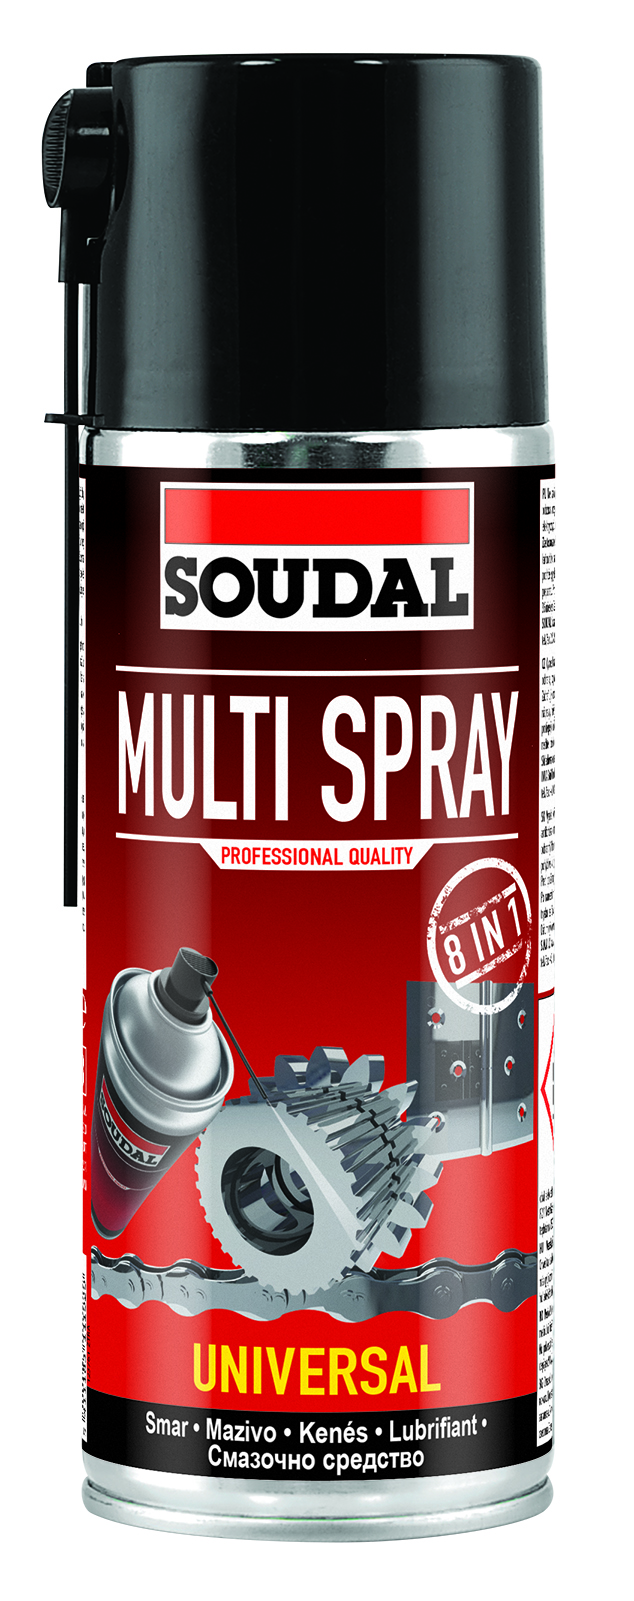 Многофункциональная смазка 400 мл. Multi Spray SOUDAL